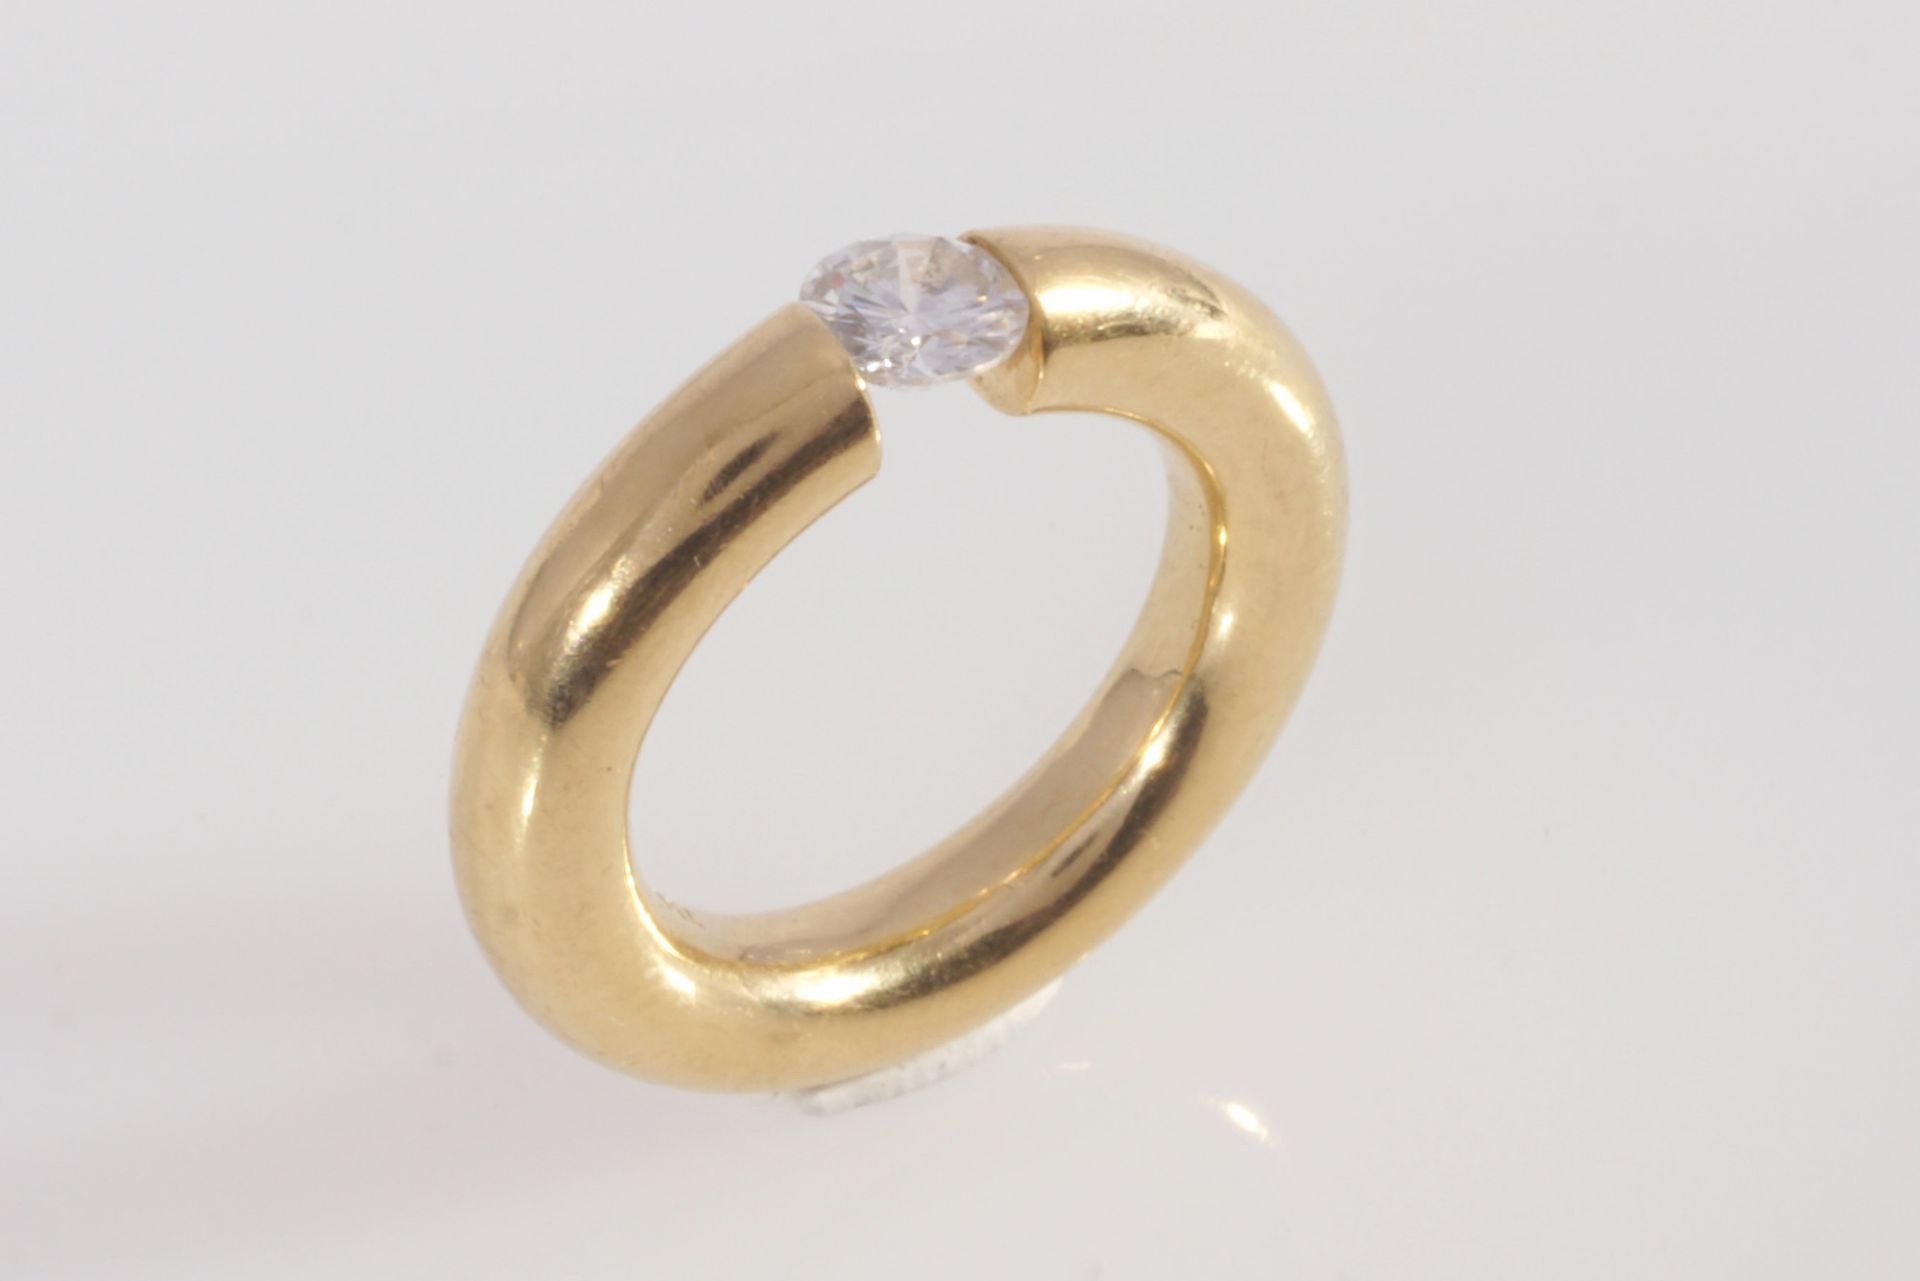 750 gold clamping ring with diamond 0,75 carat, 18K Gold Spannring mit Brillant, Niessing art, - Image 3 of 4